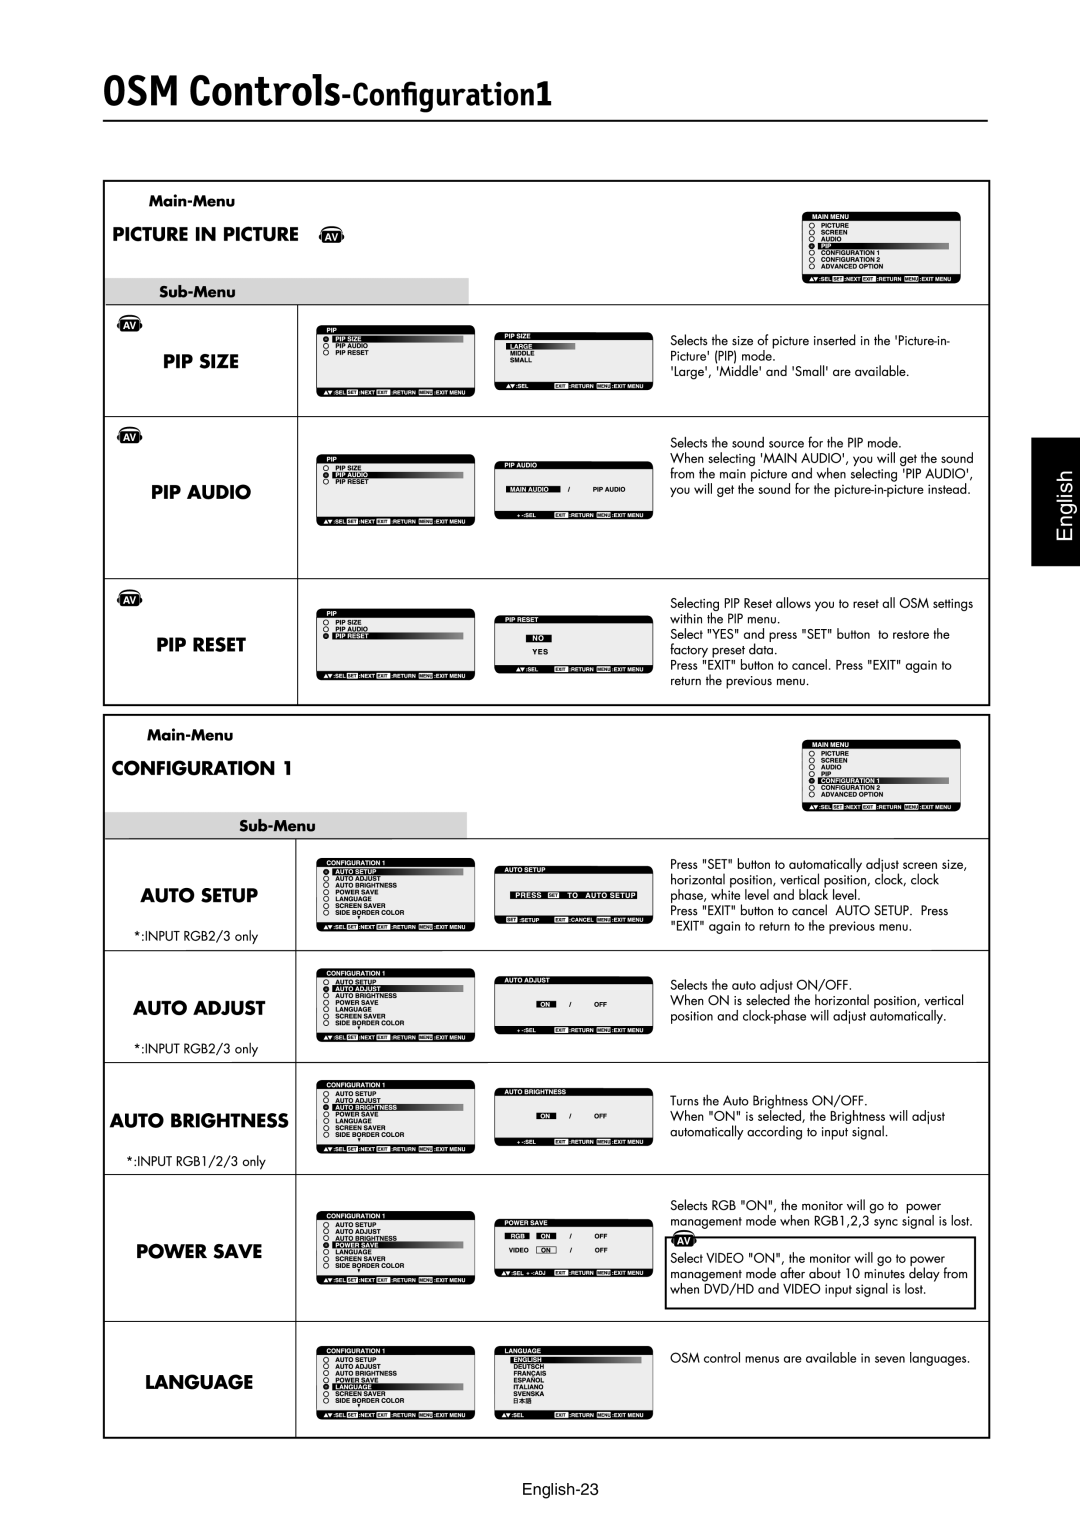 NEC LCD3210 manual OSM Controls-Conﬁguration1, English-23 